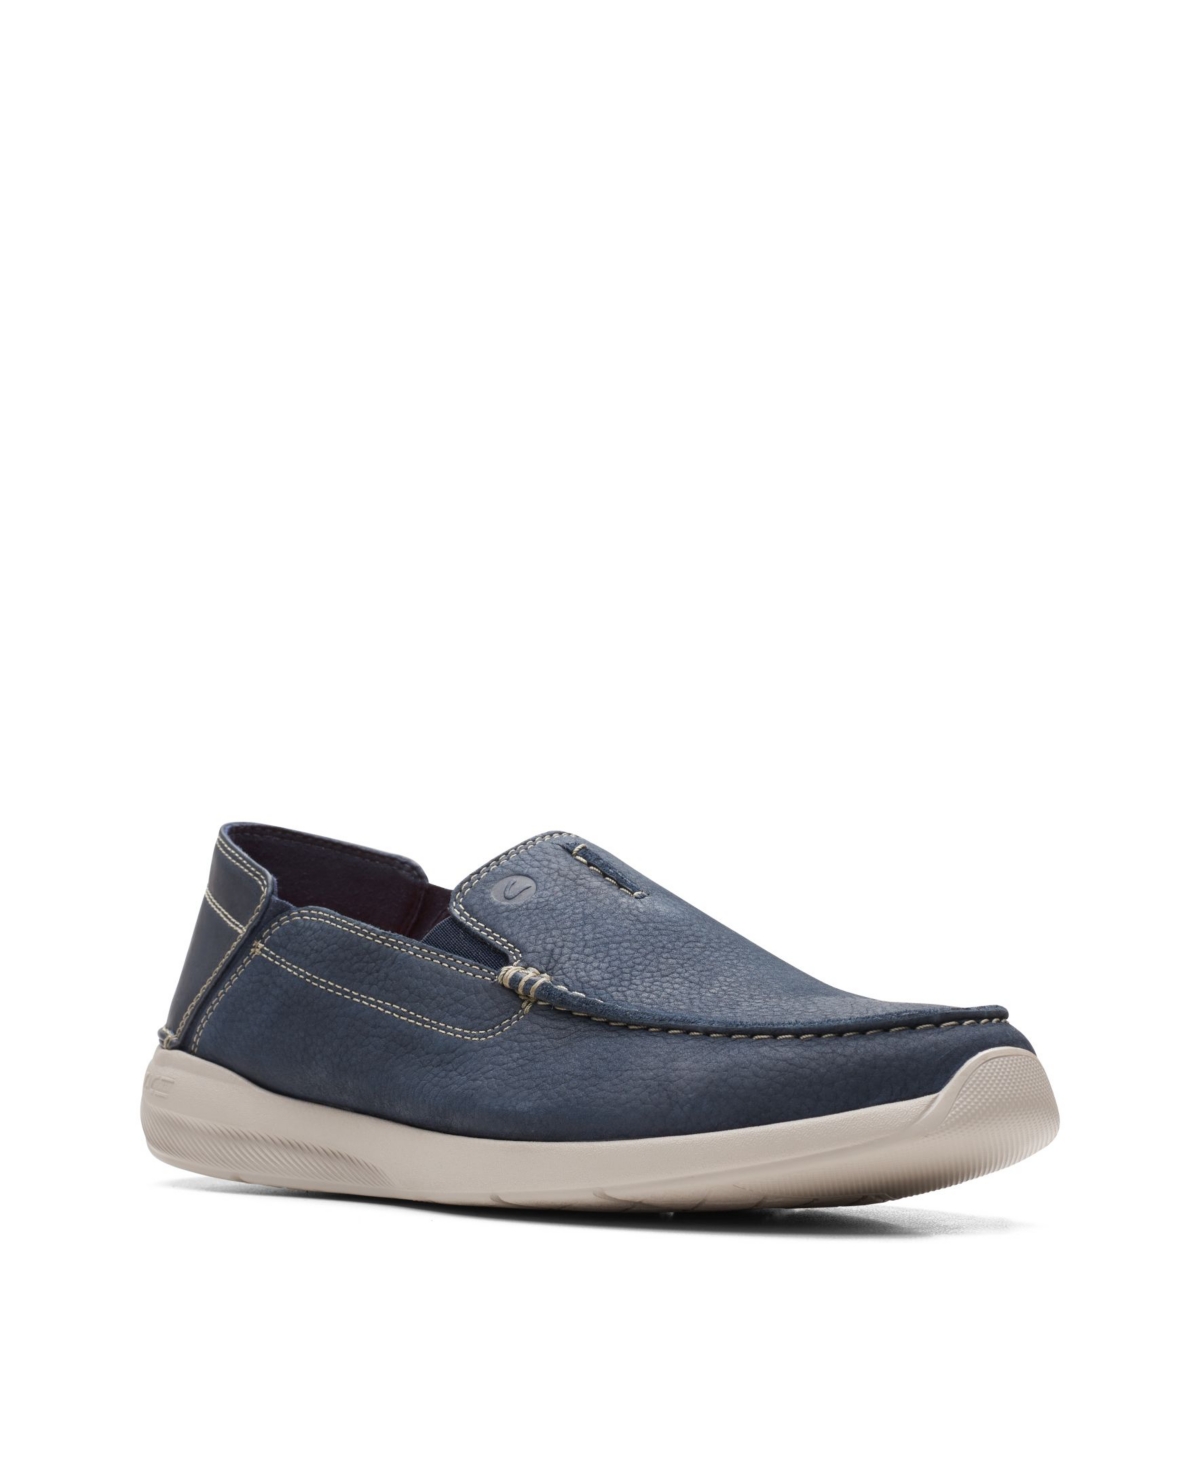 Men's Gorwin Step Slip On Loafer Shoes - Navy